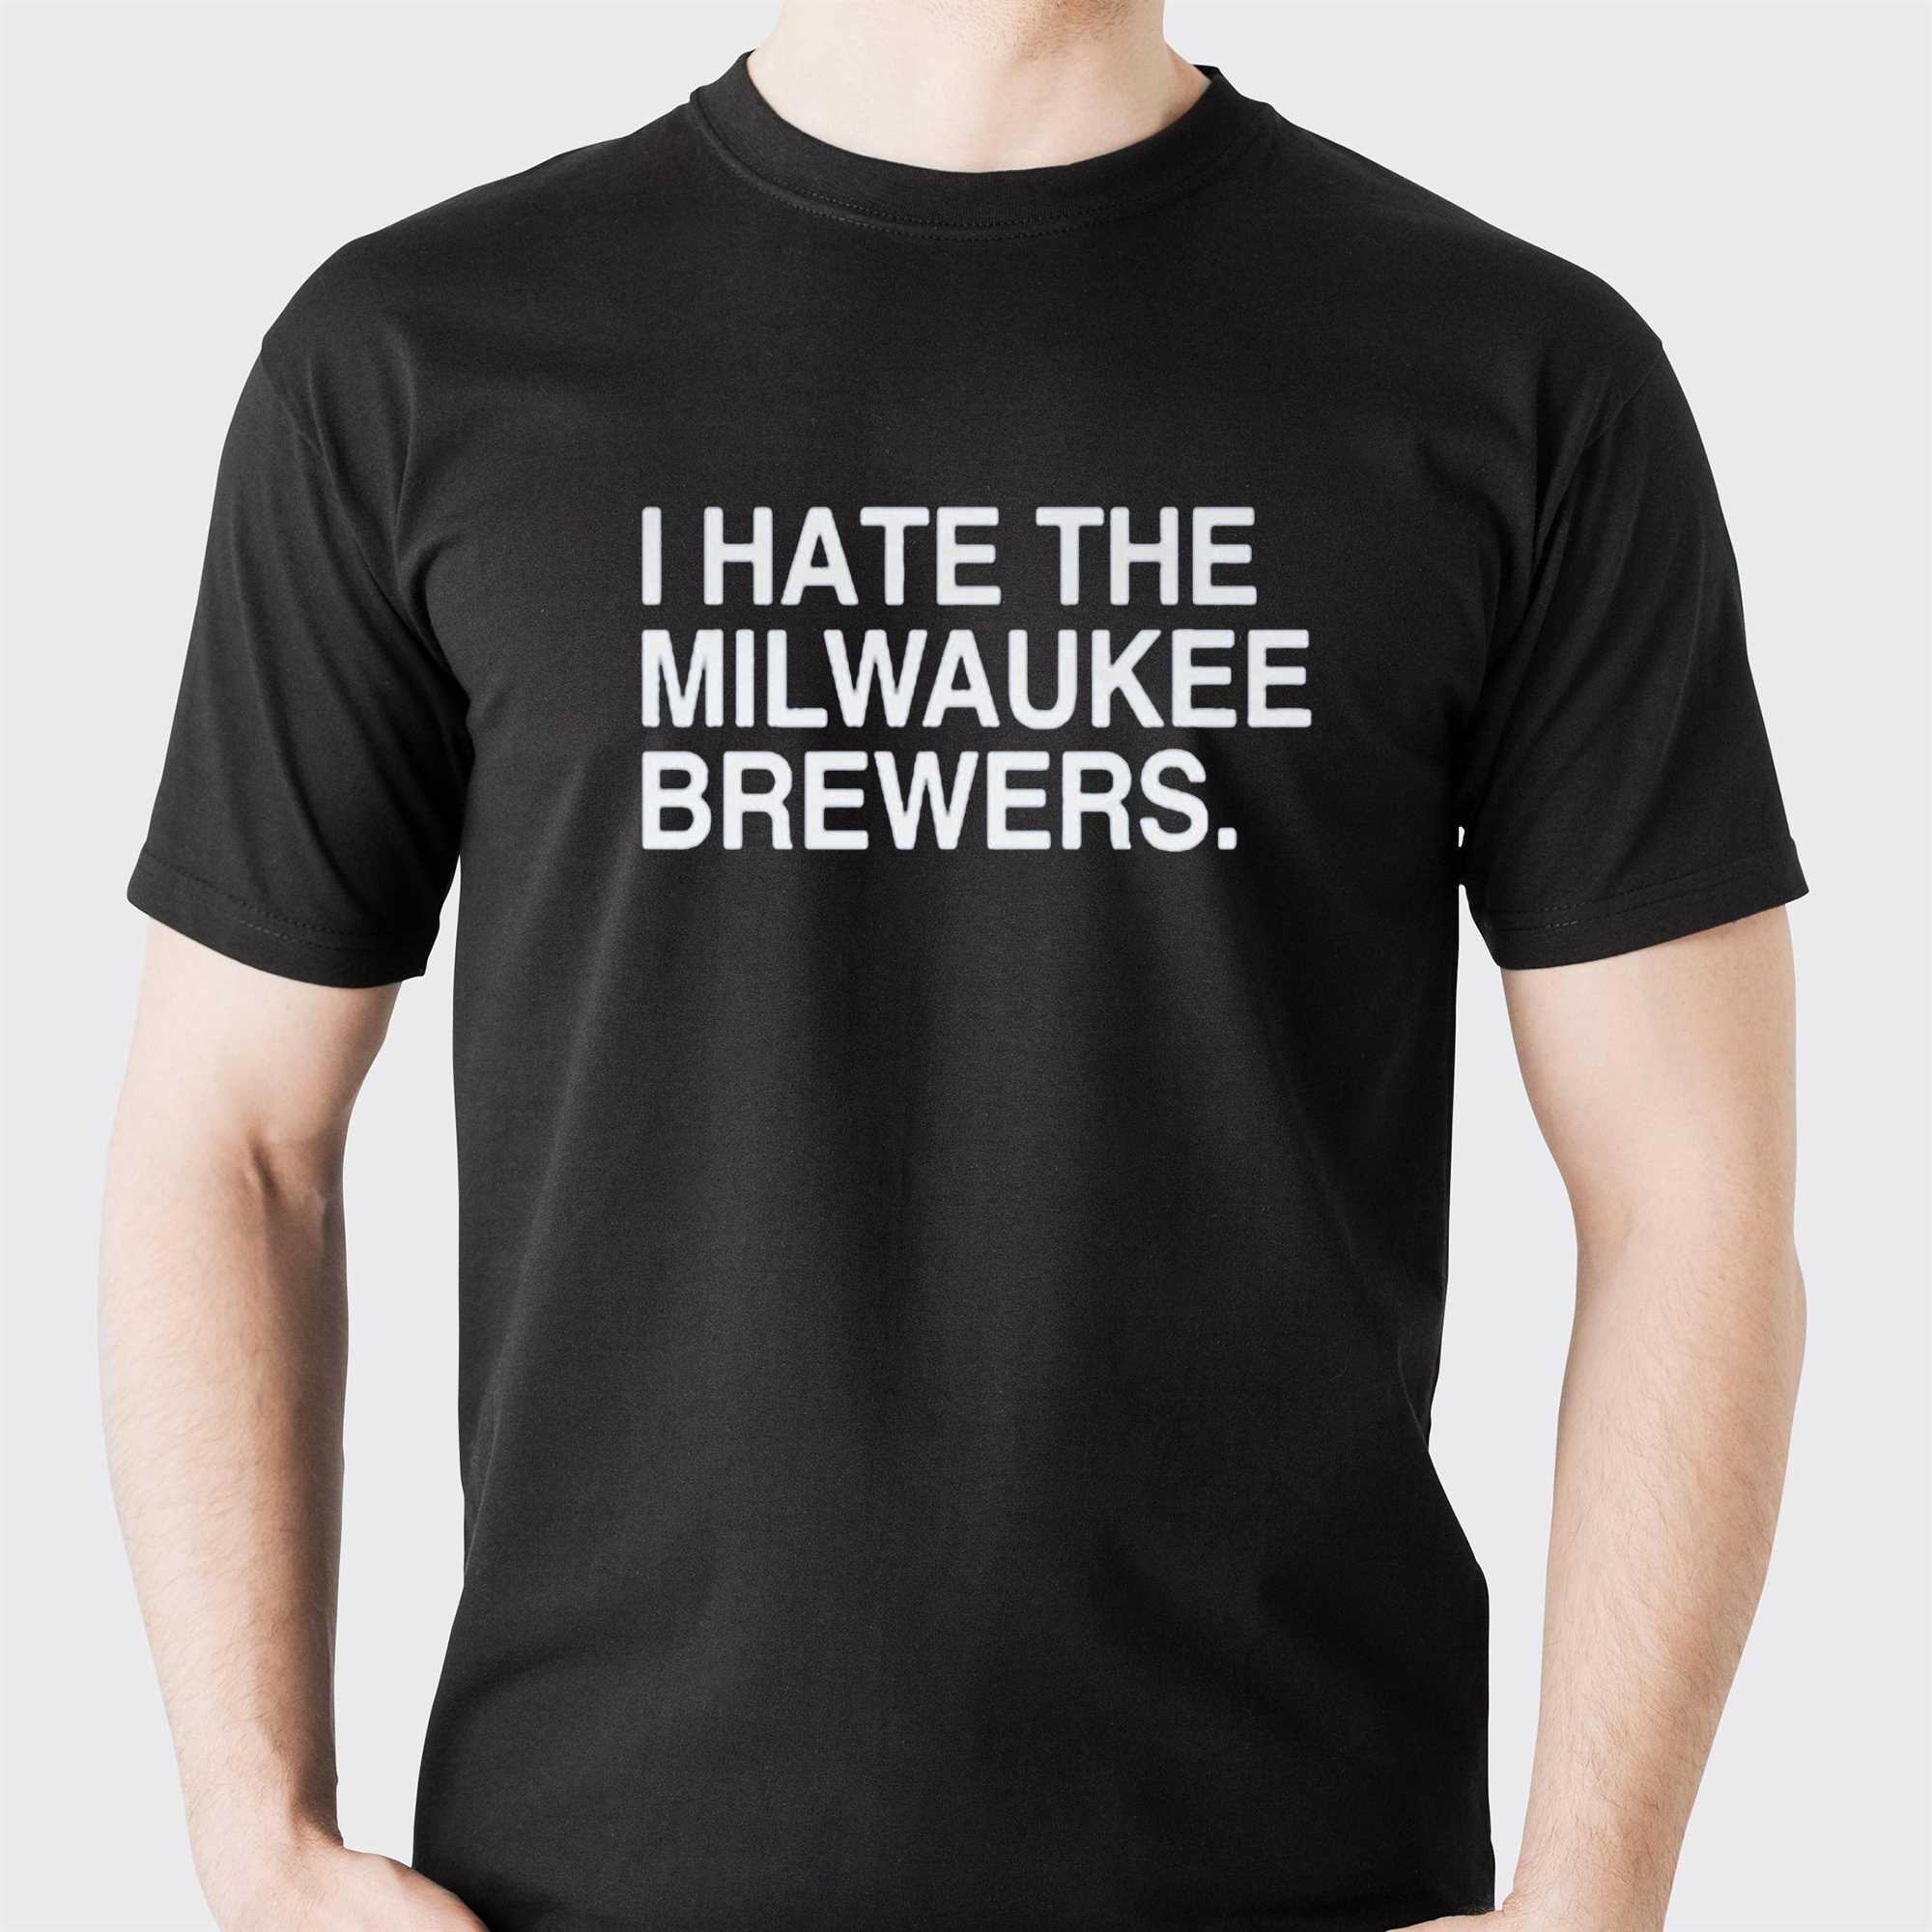 milwaukee brewers shirts near me